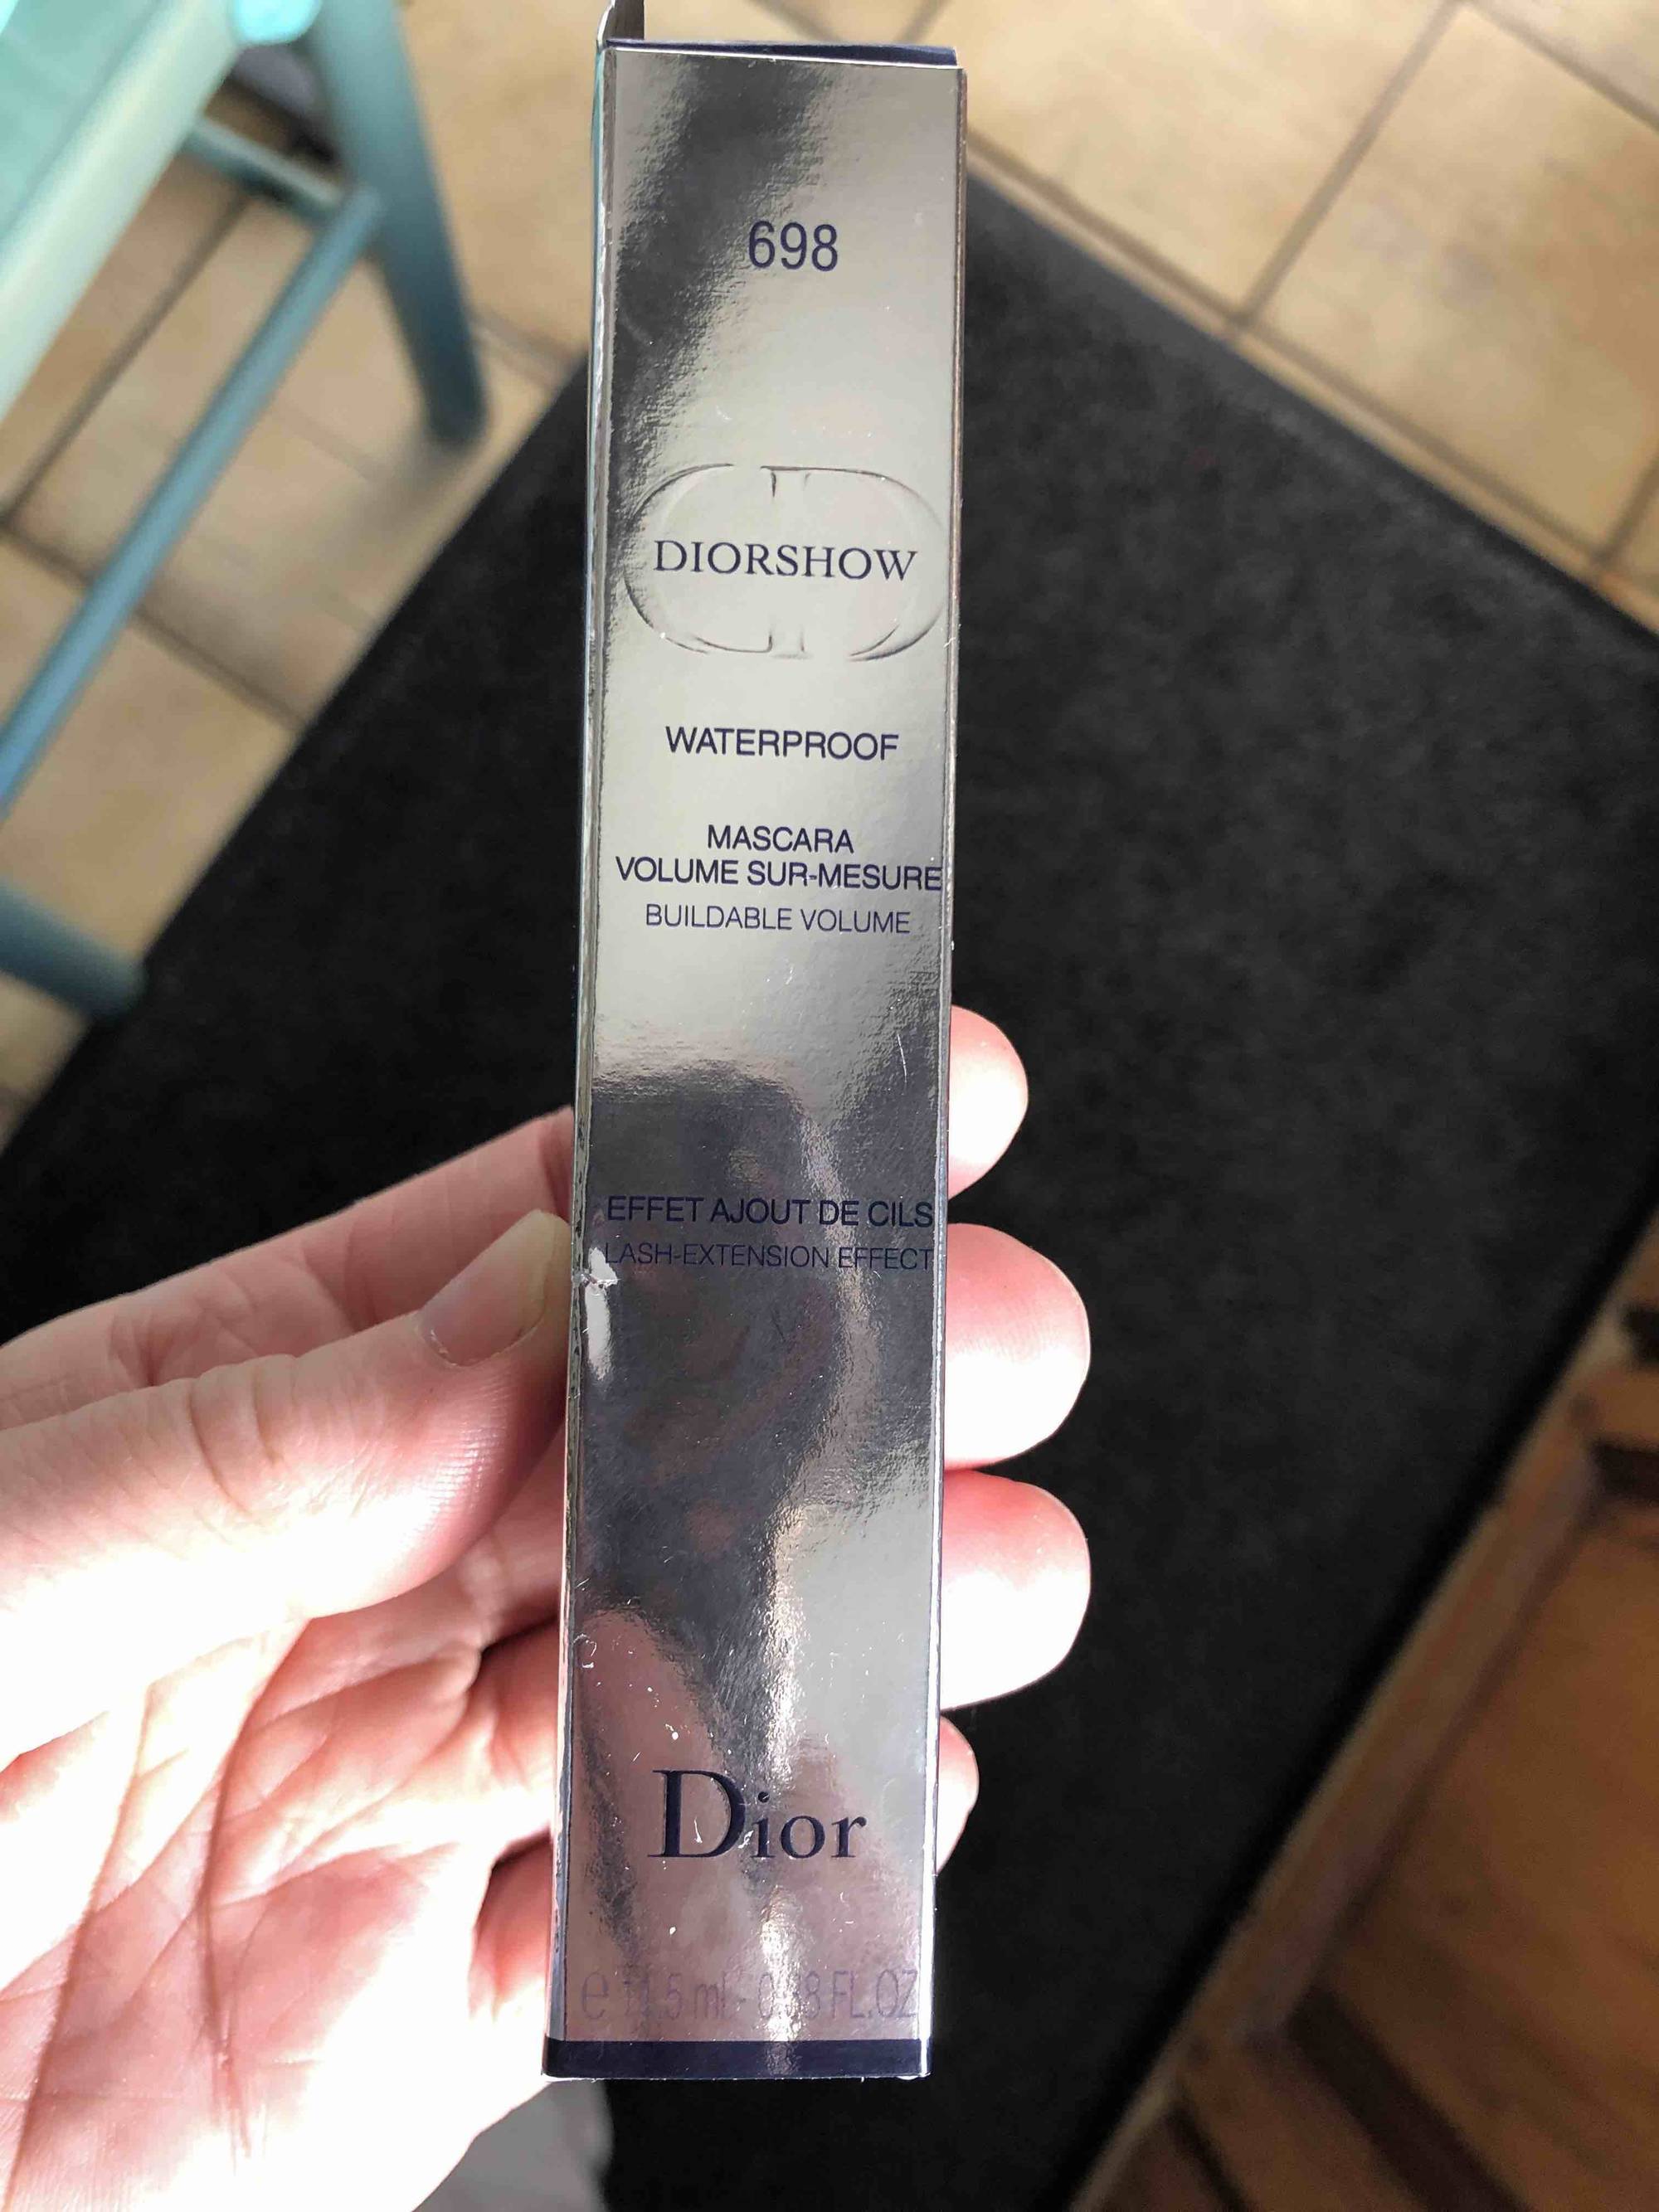 DIOR - Diorshow - Mascara volume sur-mesure waterproof